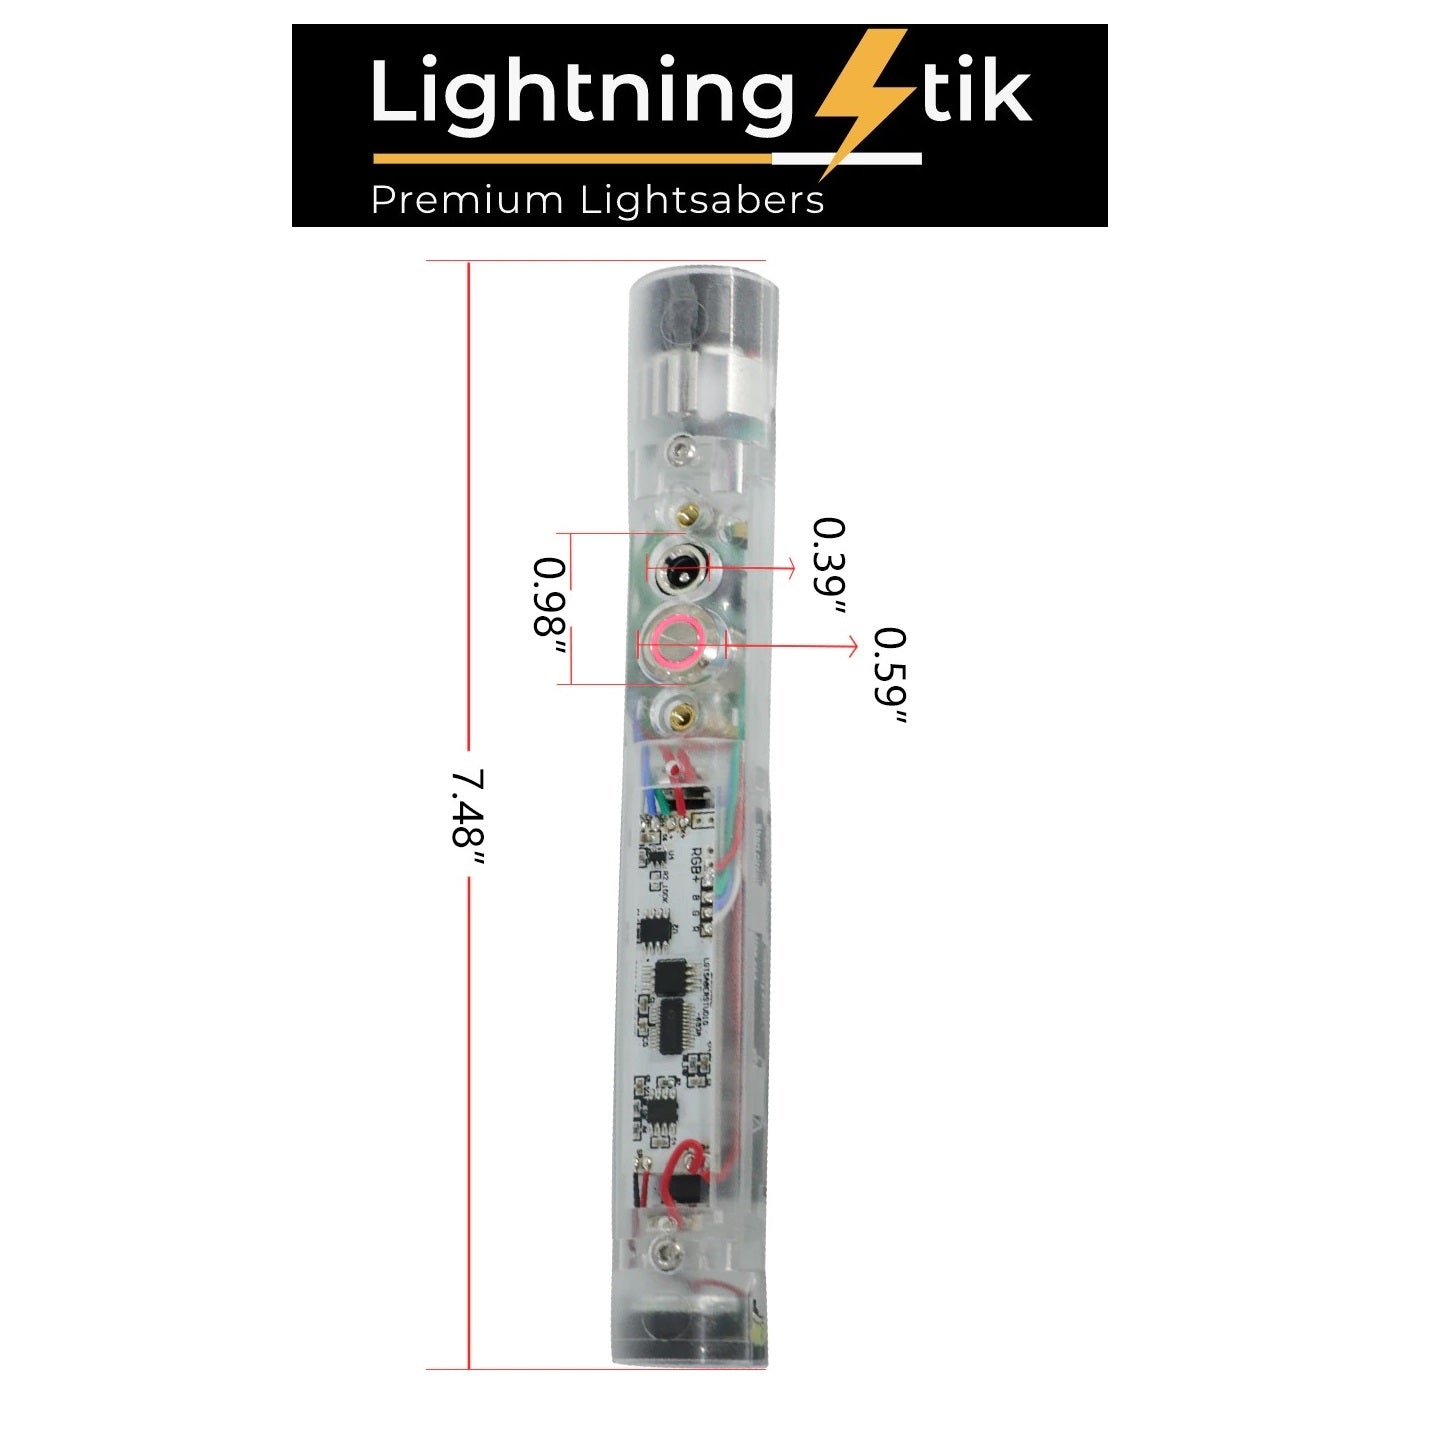 Light saber sound card board electronics kit smooth swing lightning stik